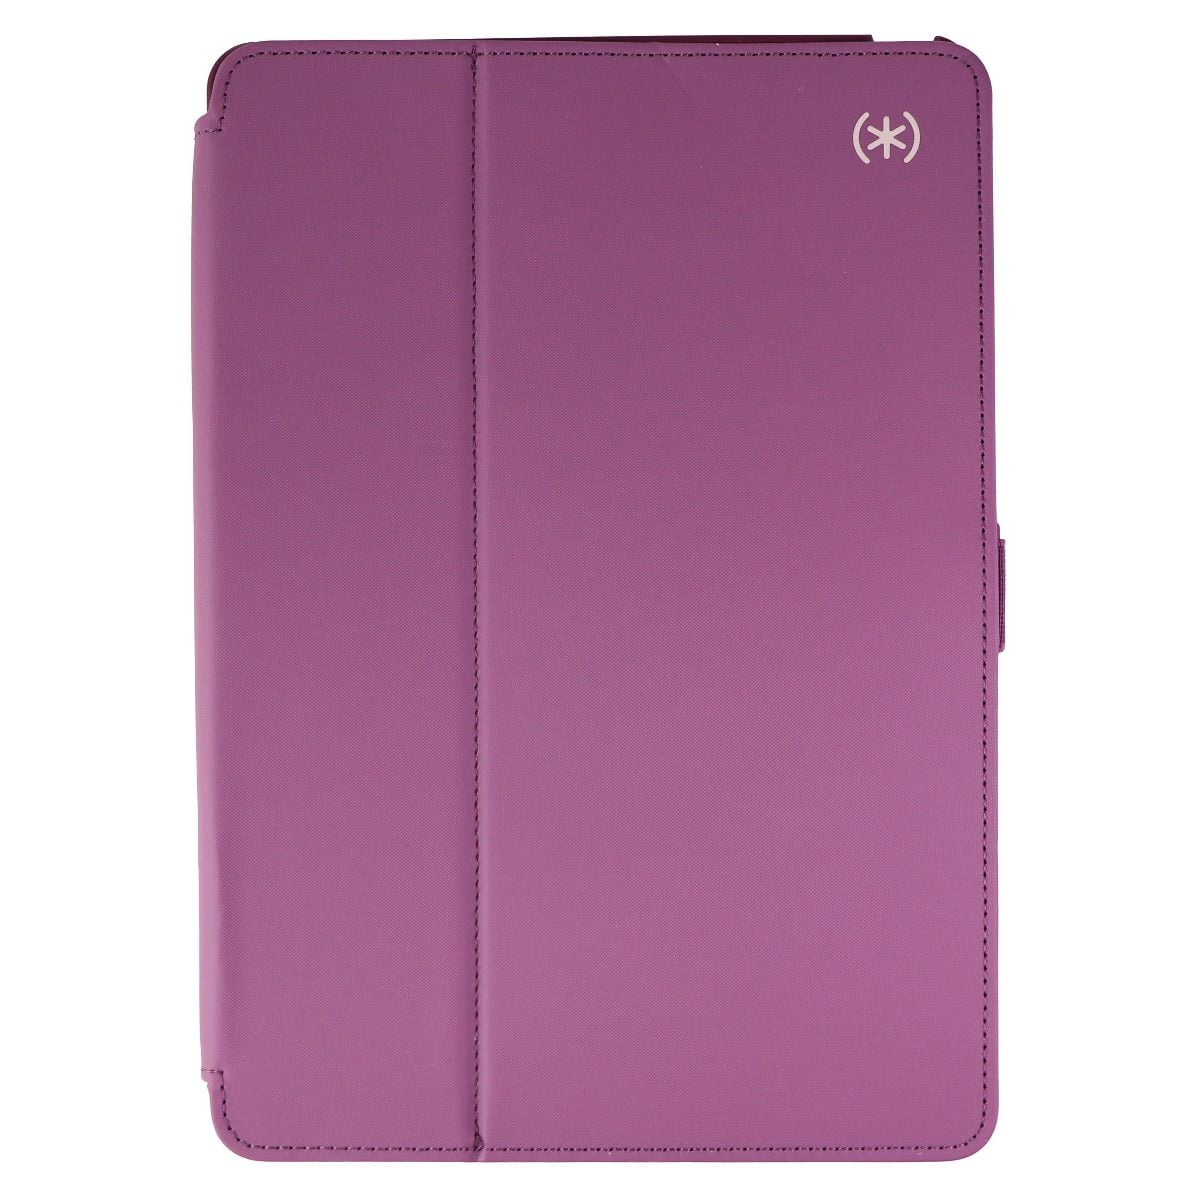 Speck Balance Folio Case for iPad 10.2-inch (2019) - Plumberry Purple ...